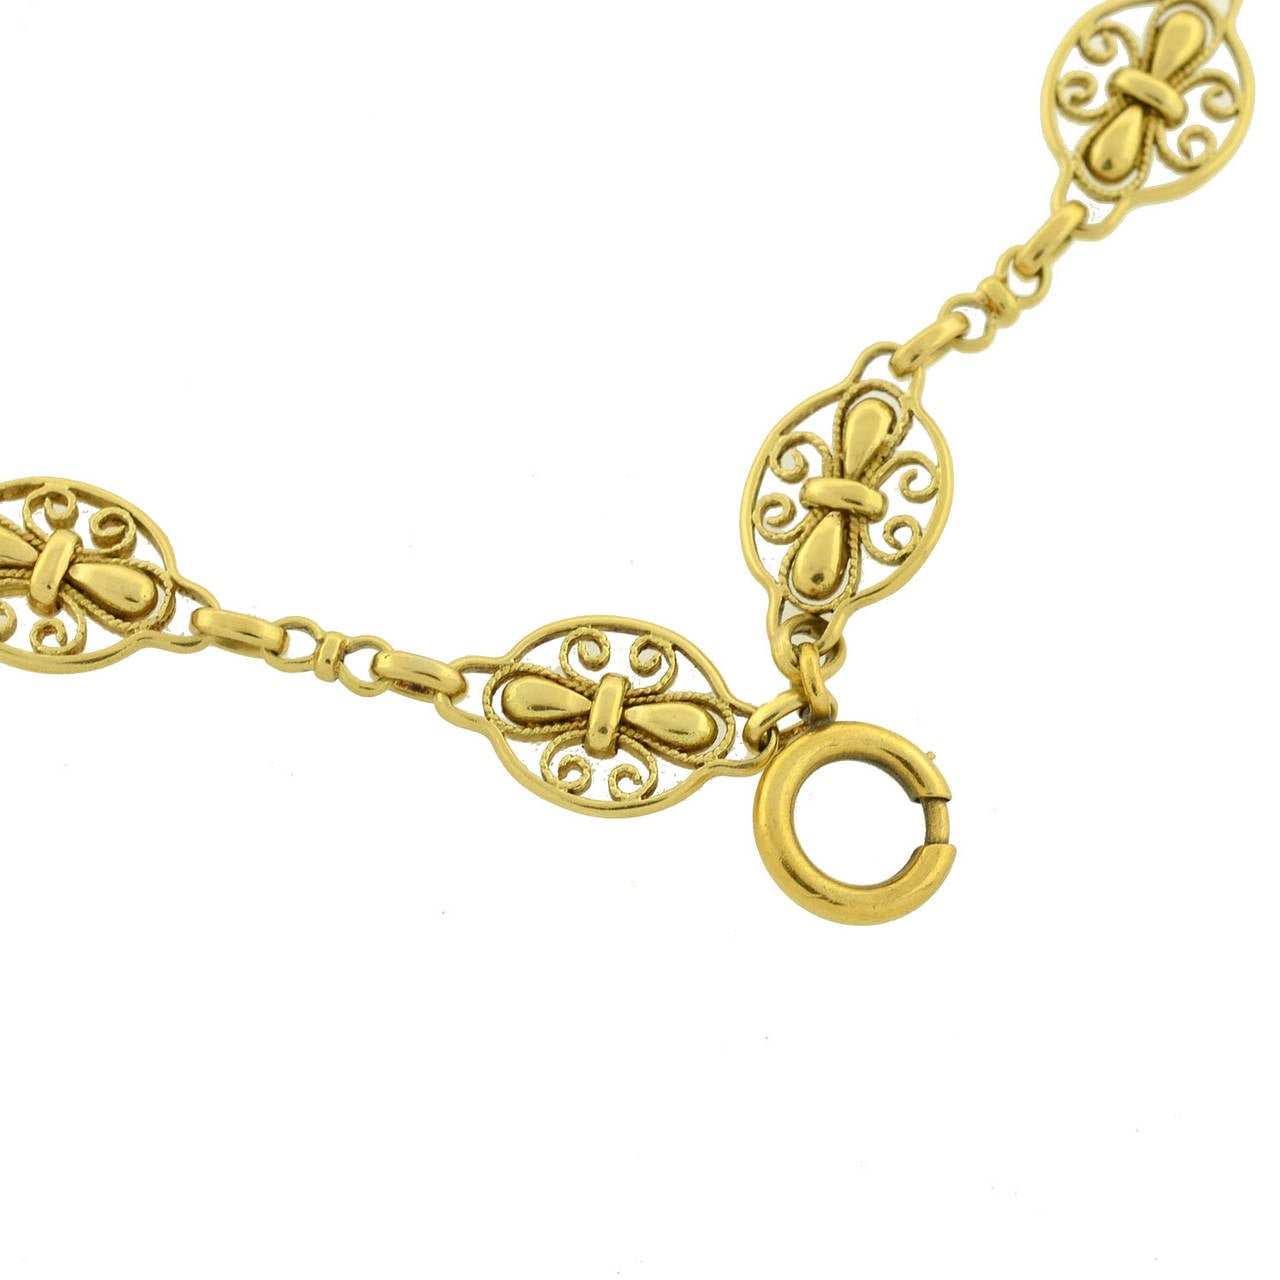 Women's Art Nouveau French Ornate Fleur de Lys Motif Gold Chain